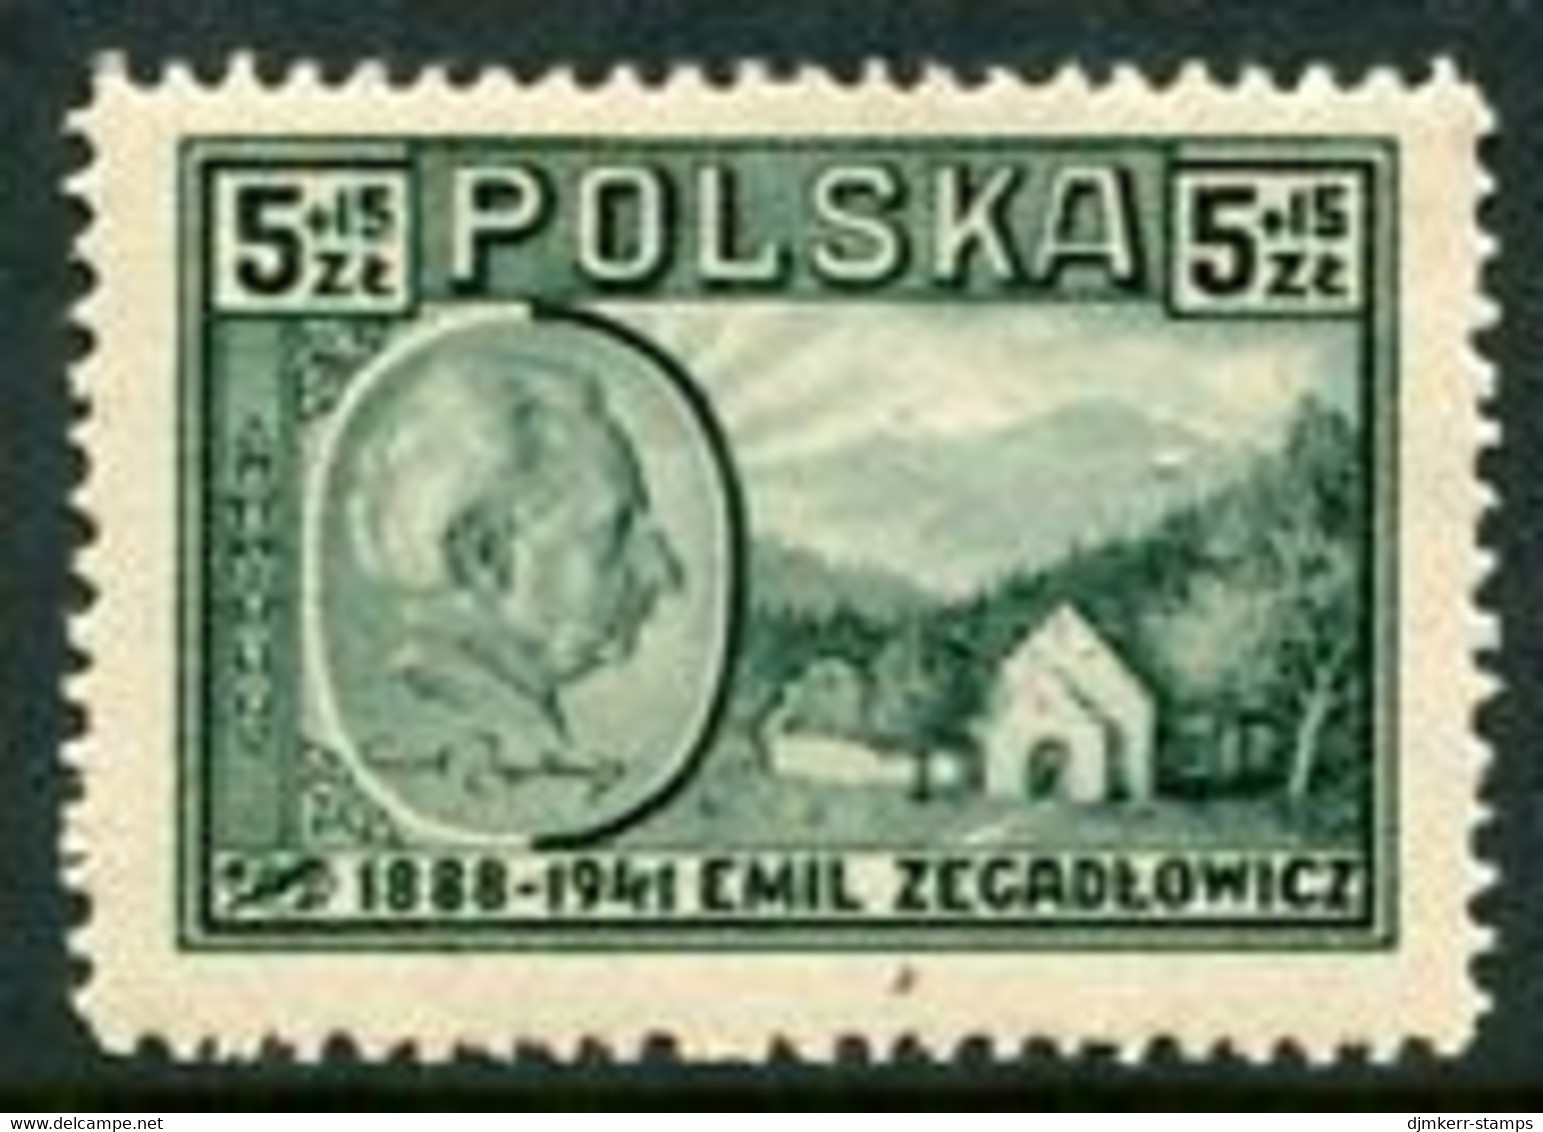 POLAND 1947 Zegadlowicz LHM / *.  Michel 453 - Unused Stamps